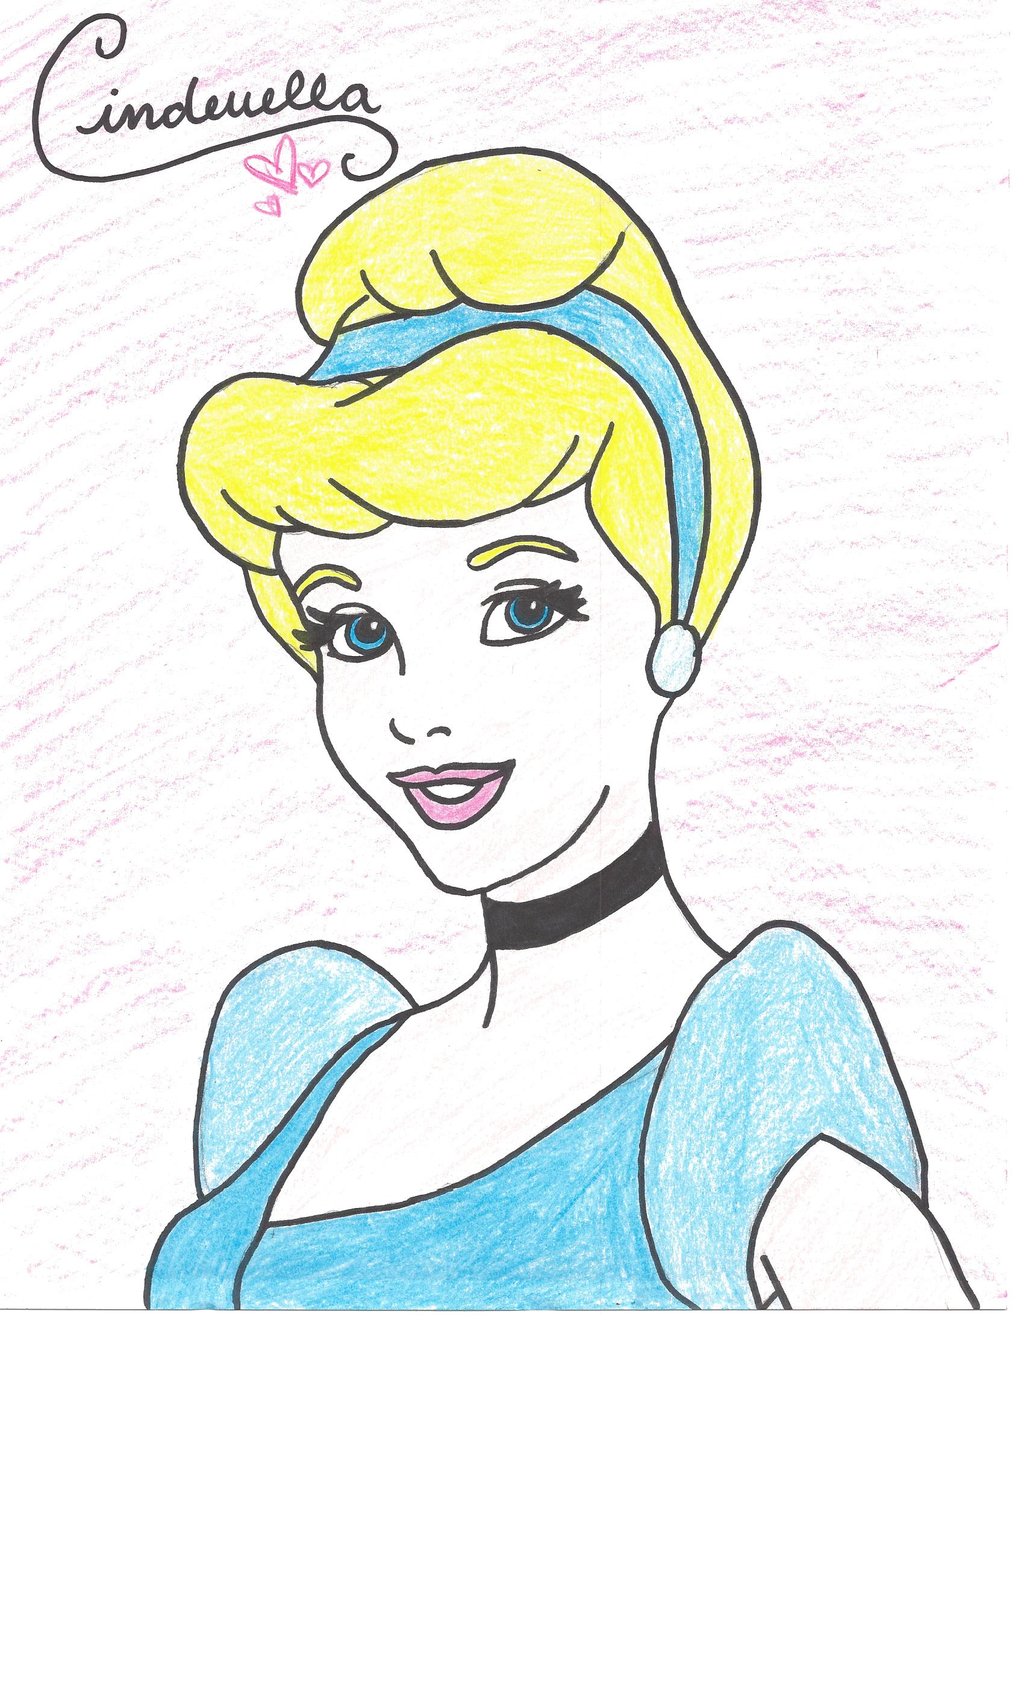 Cinderella Image Drawing